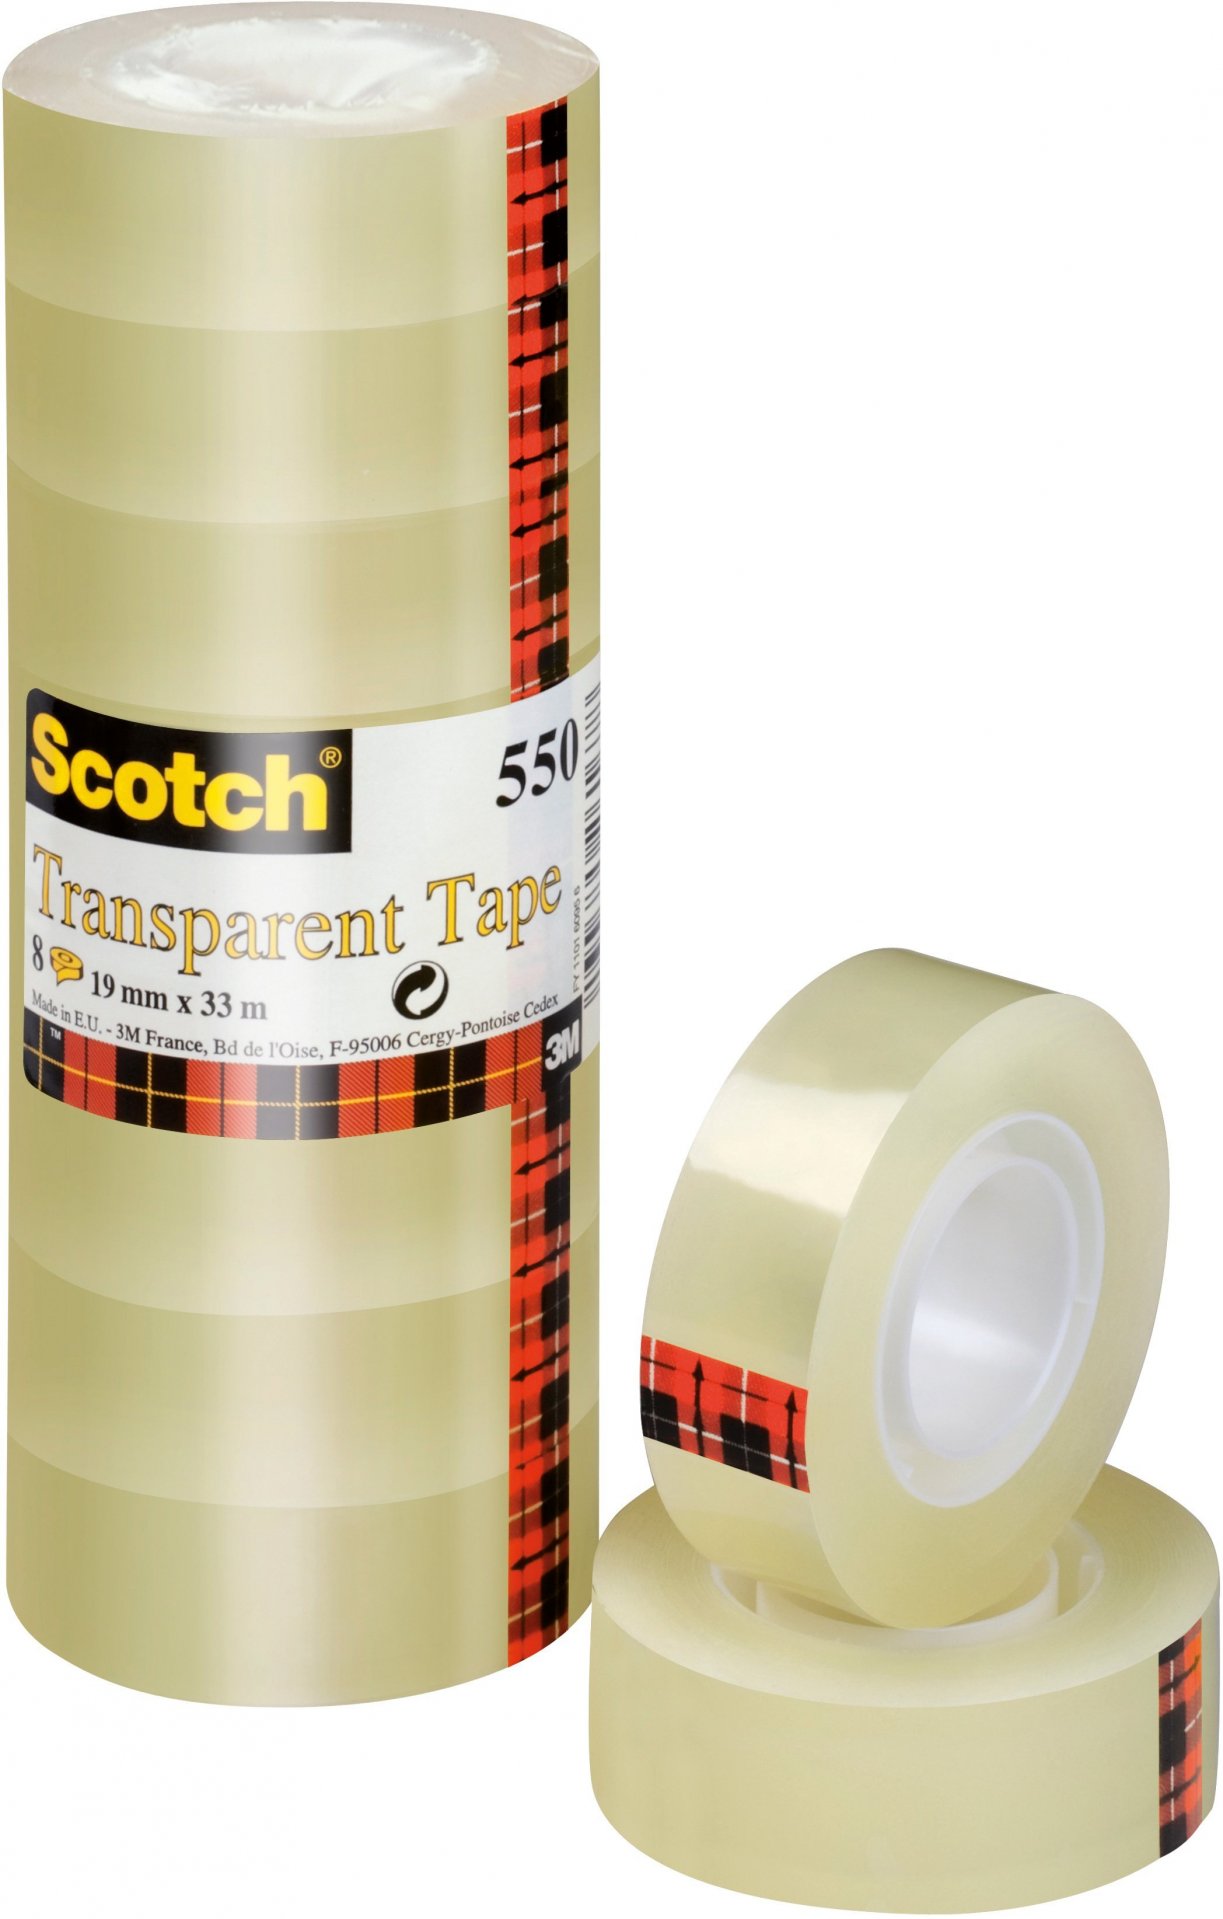 Buy 3M Scotch Transparent 550 online at Modulor